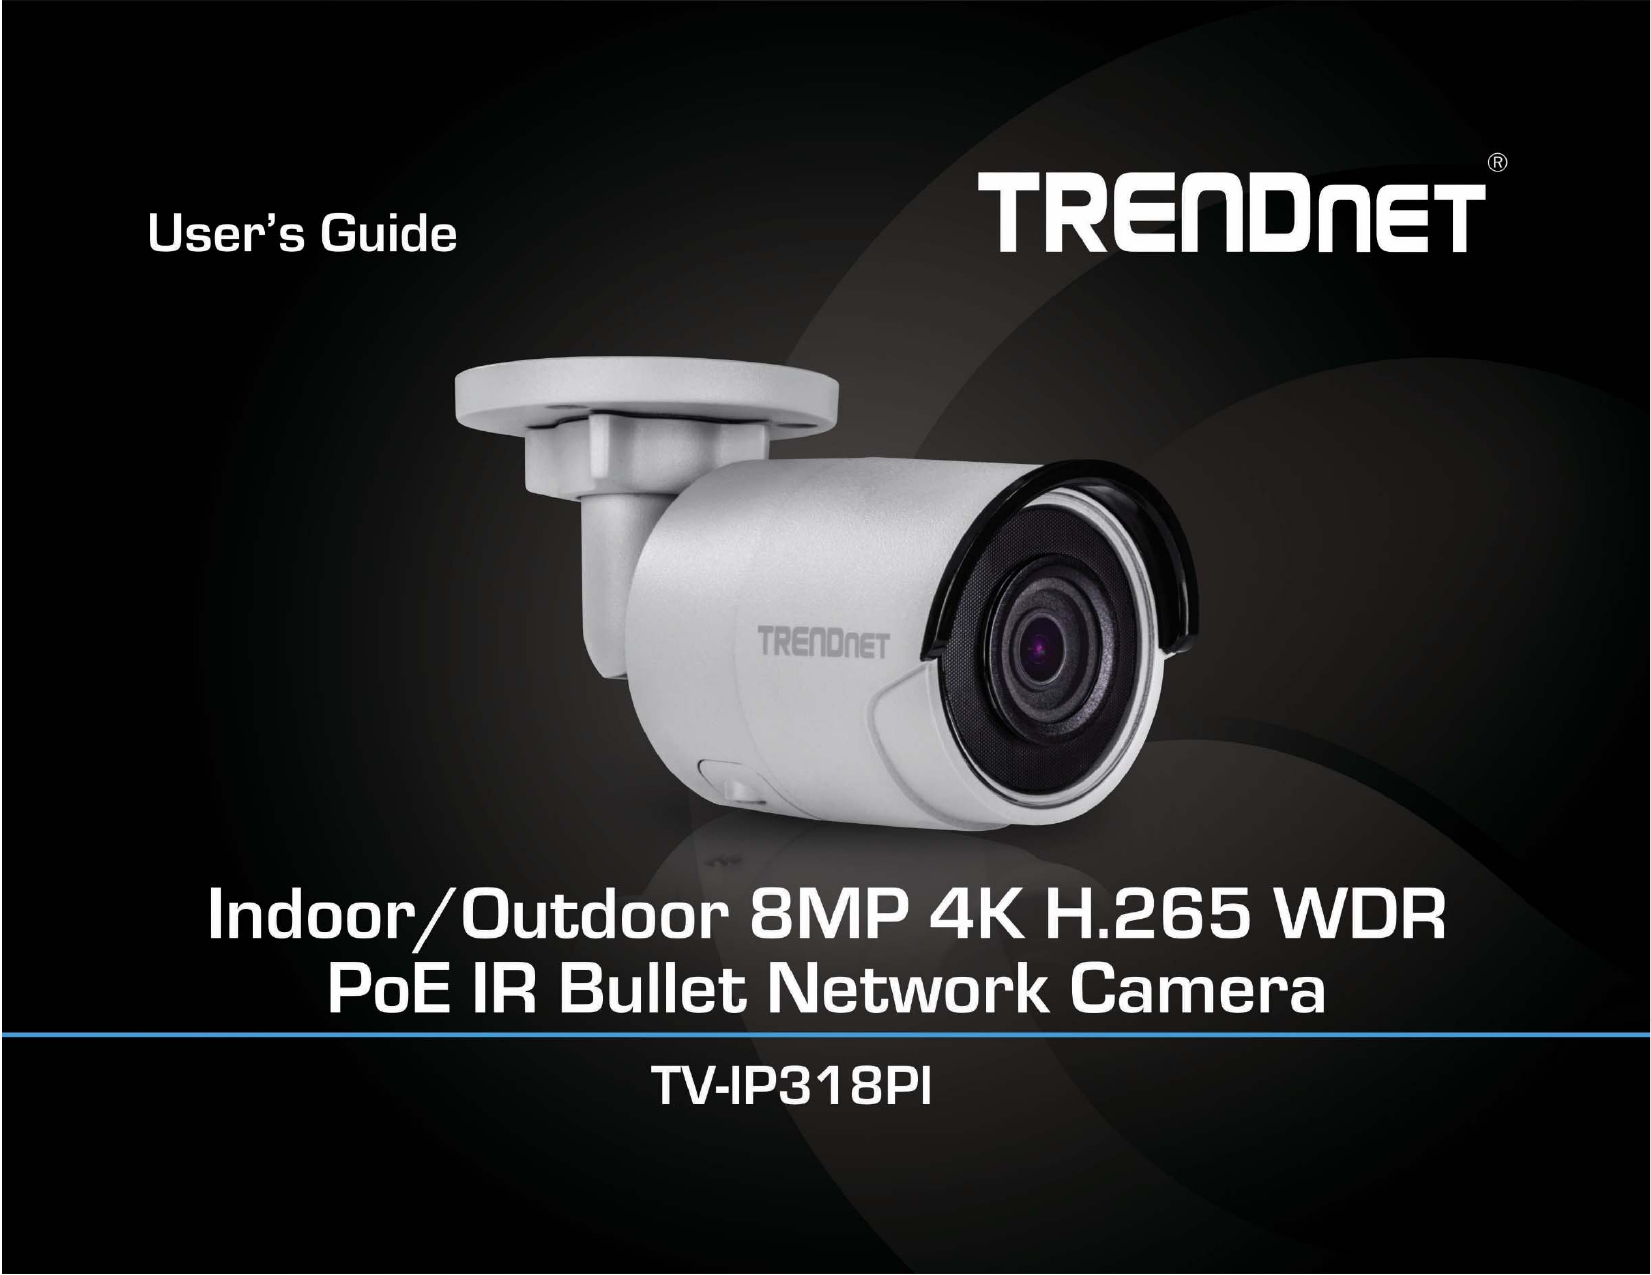 TRENDnet RB TV IP PI Indoor Outdoor MP K H WDR PoE IR Bullet Network Camera User S